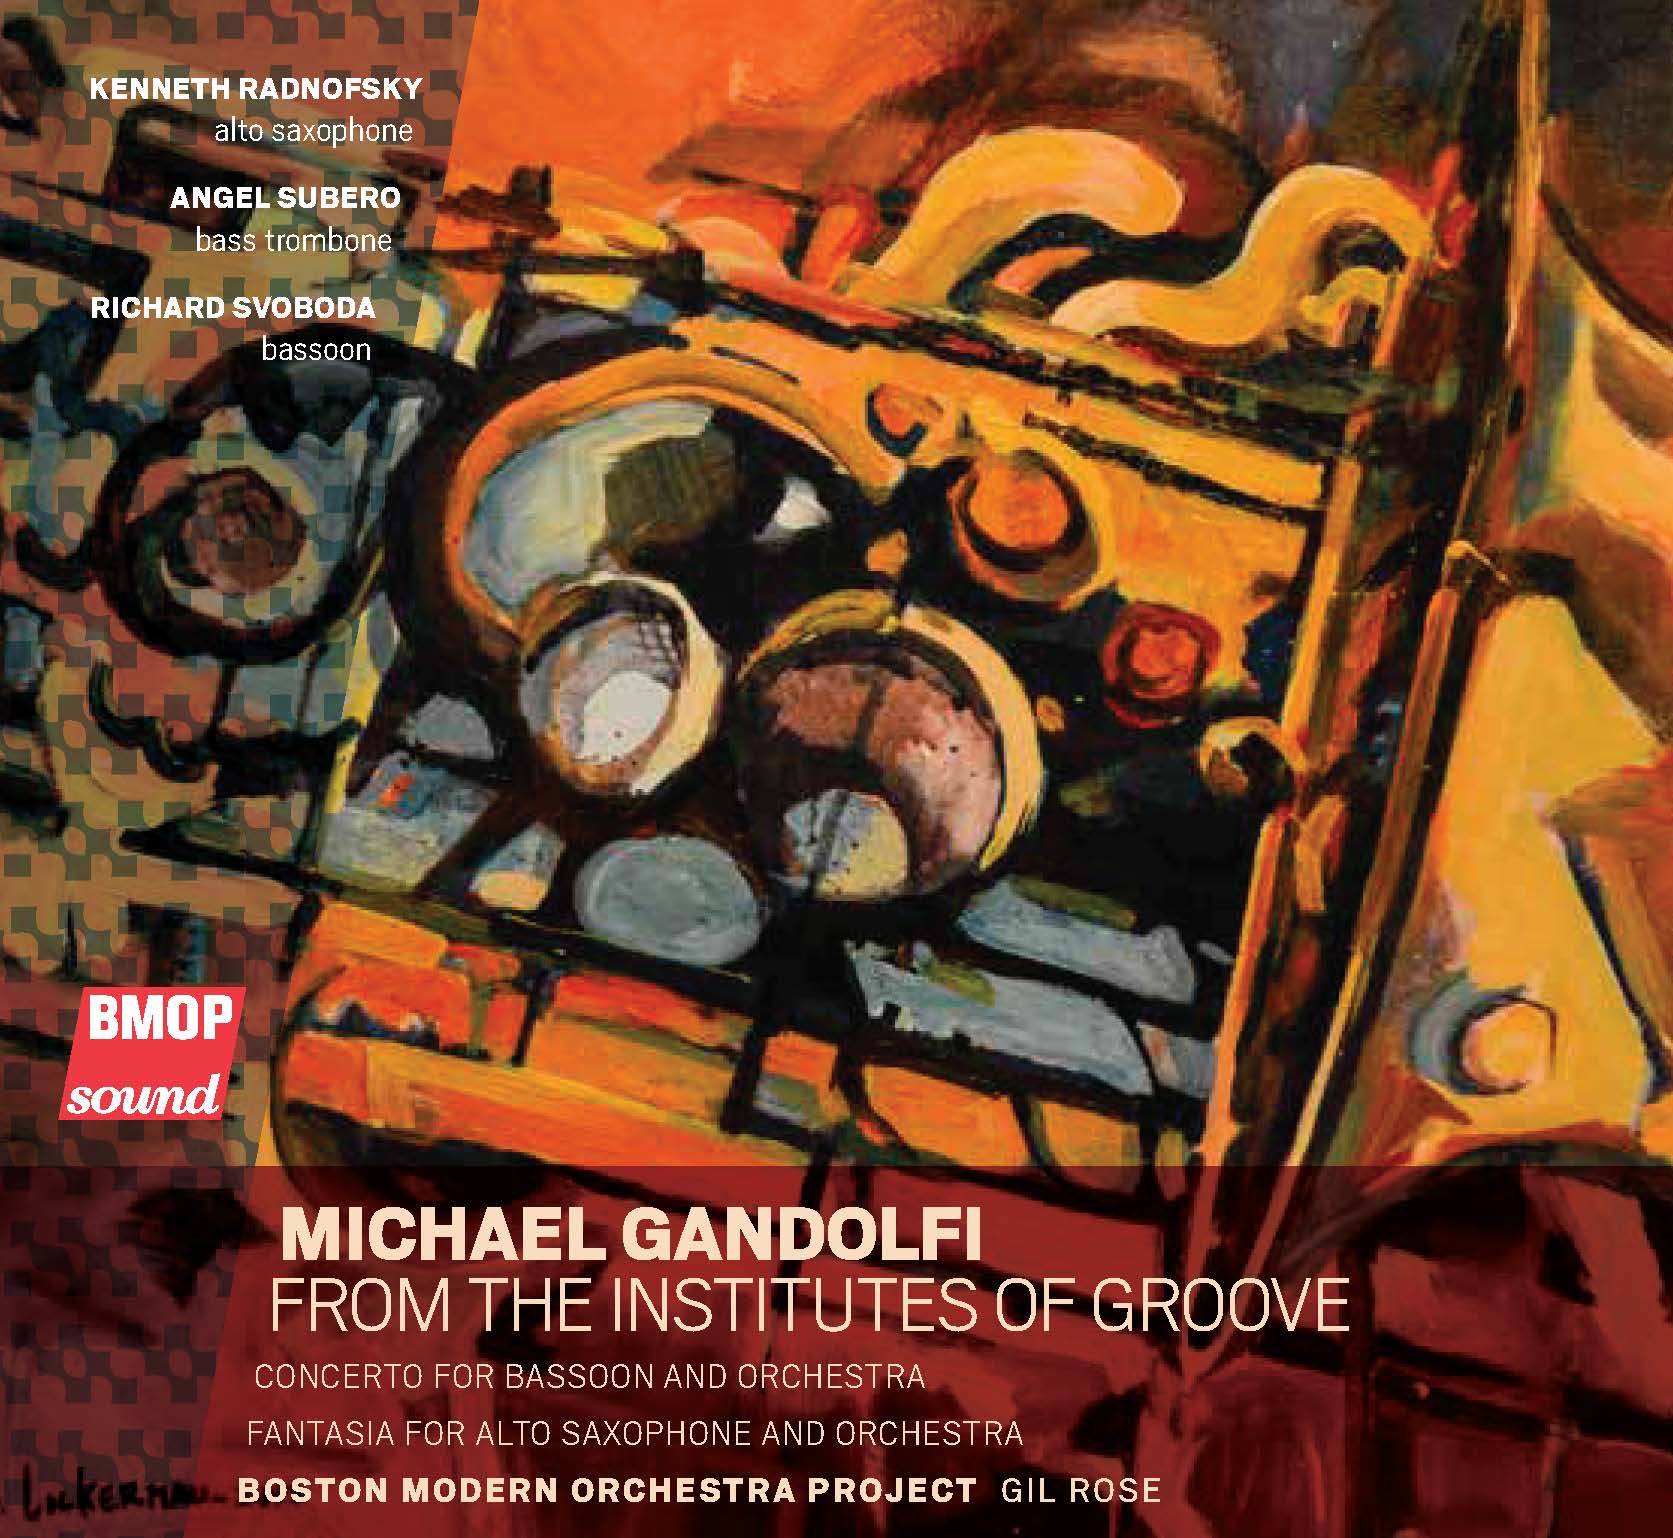 Art for Fantasia for Saxophone and Orchestra - III. Recitativo Surreale by Michael Gandolfi by Kenneth Radnofsky, alto saxophone